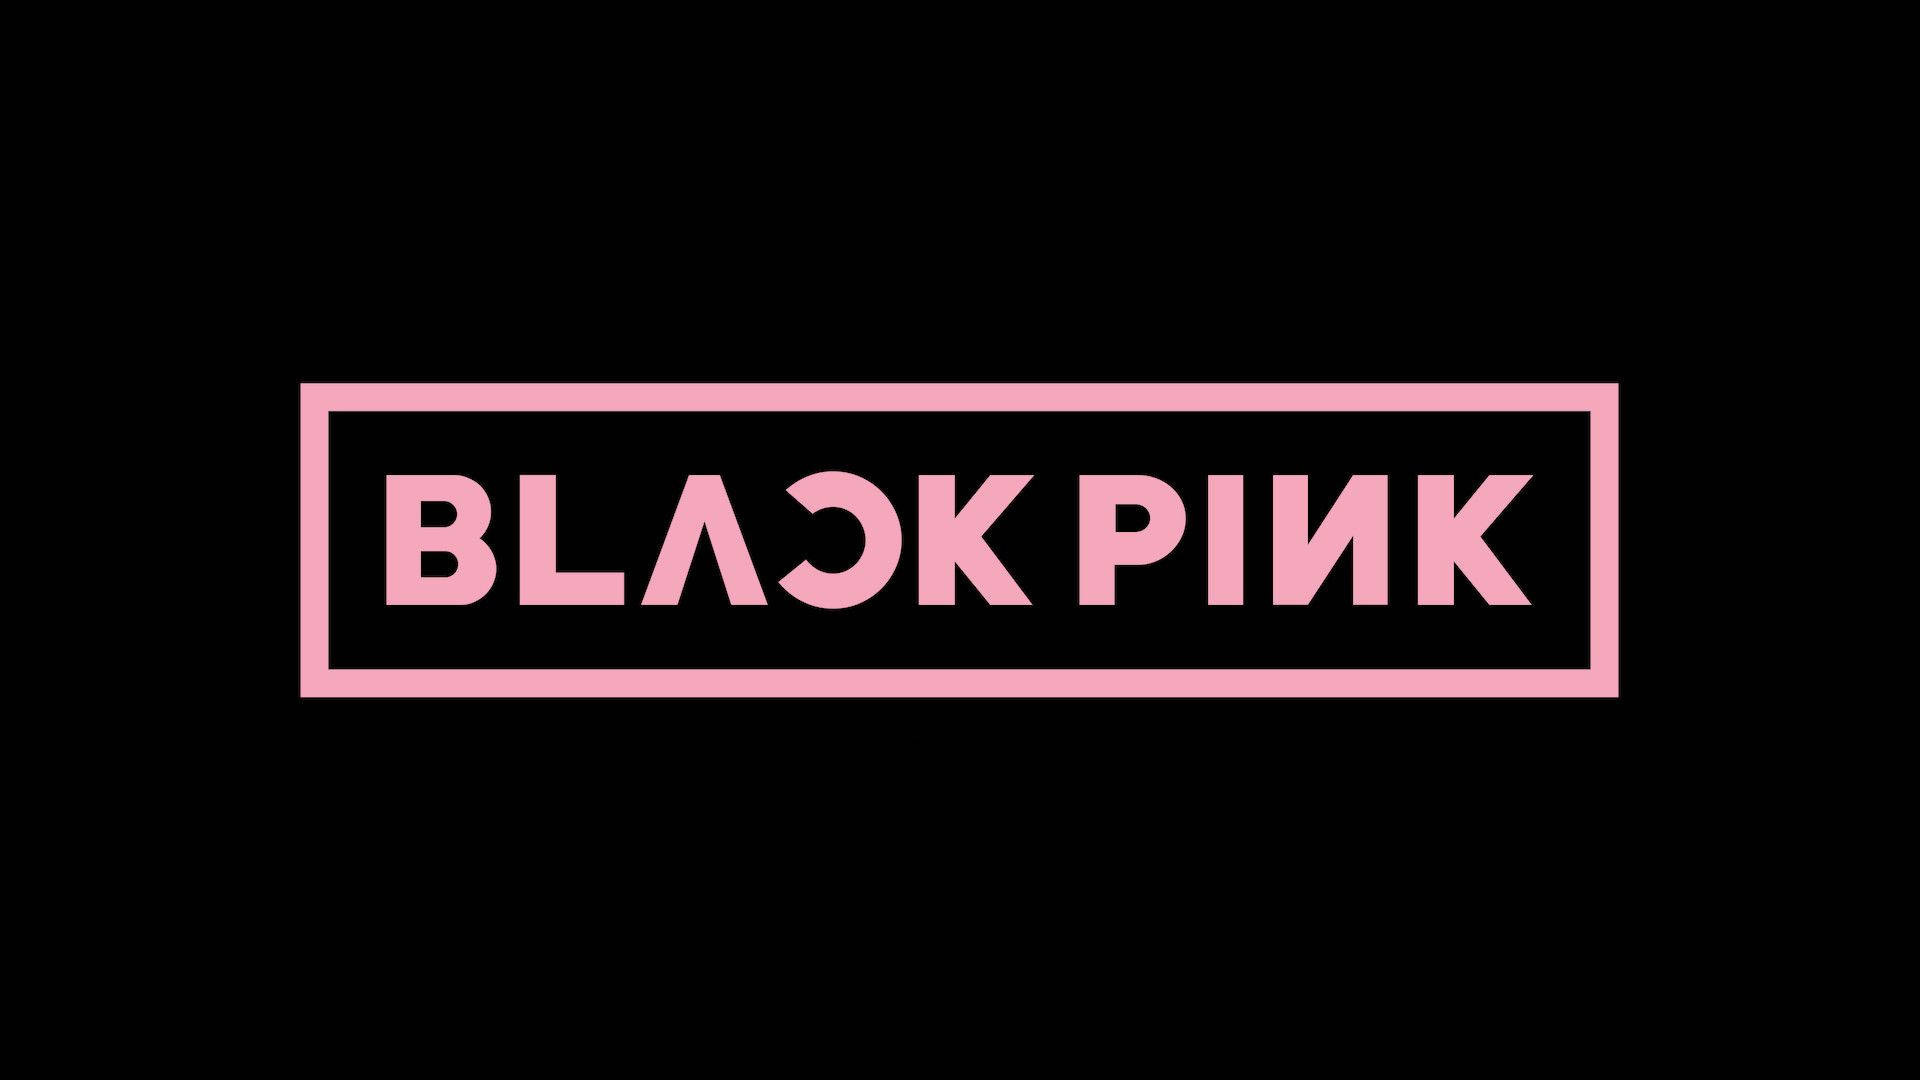 Original Blackpink Logo On Black